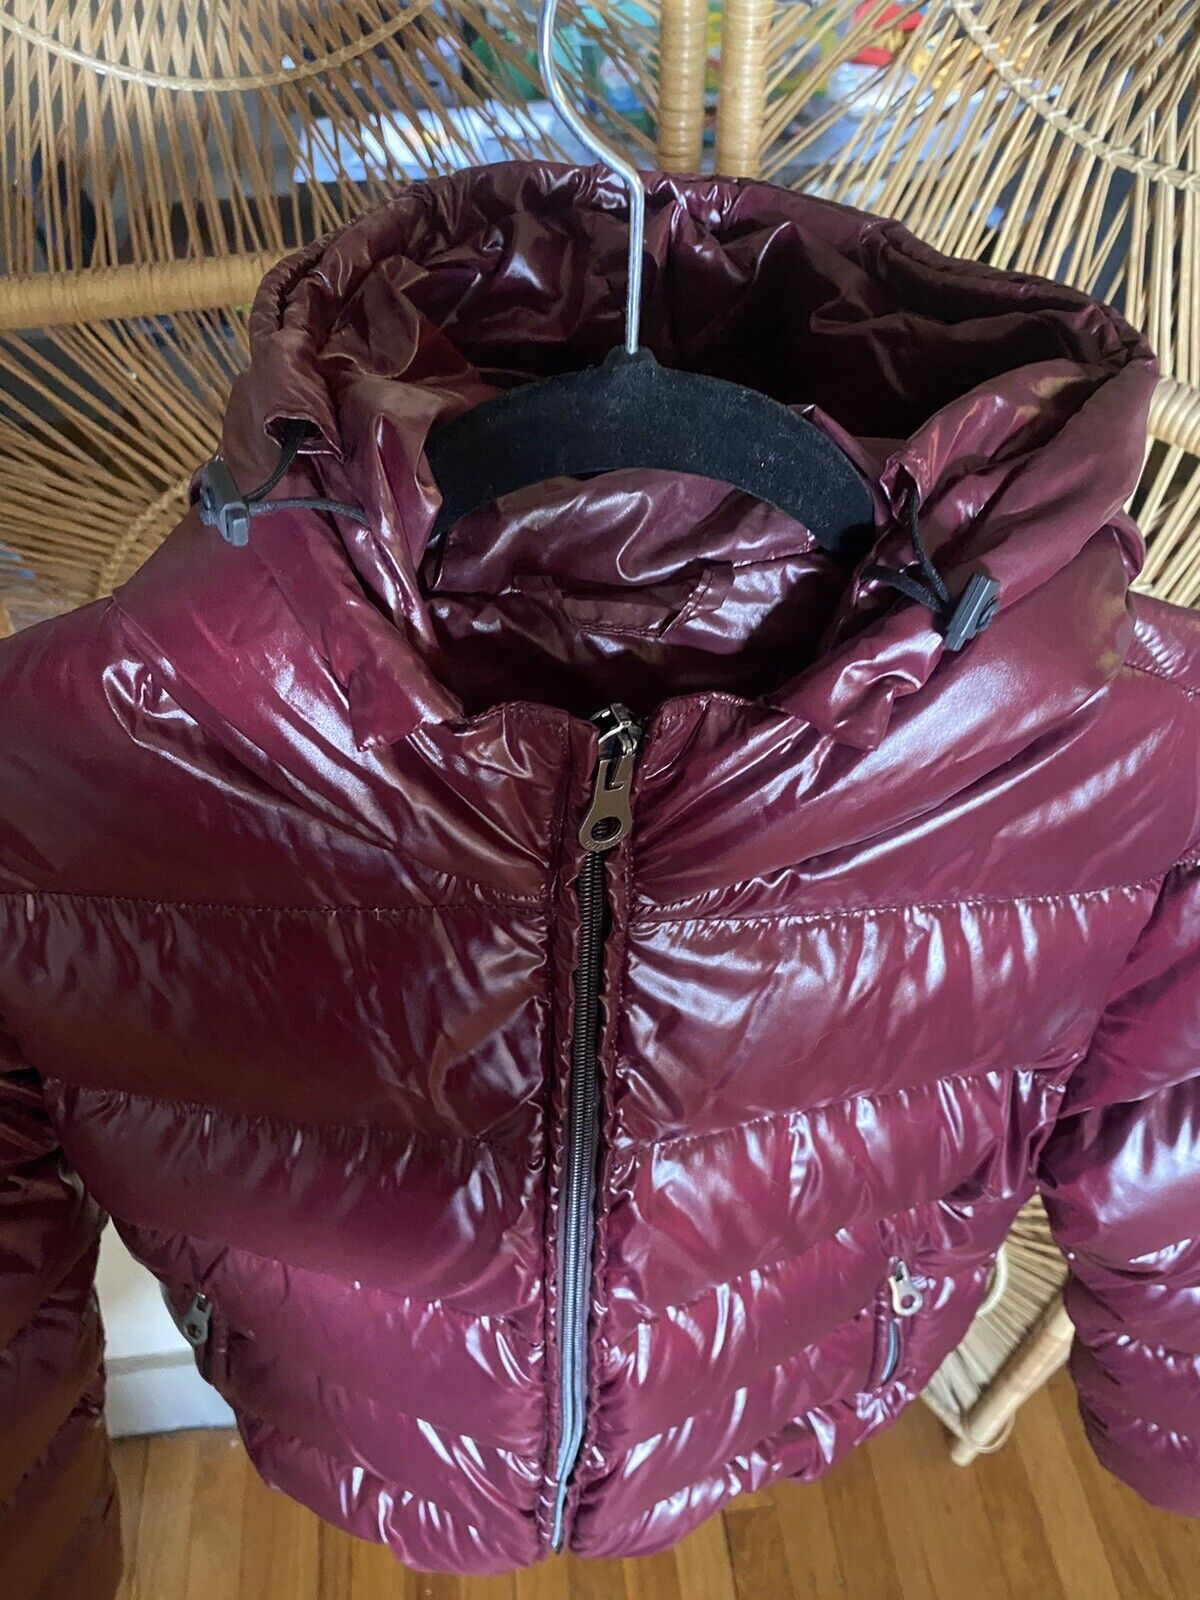 Duvetica Down Puffer Jacket size 46/Large - Burgundy Zip Up | eBay